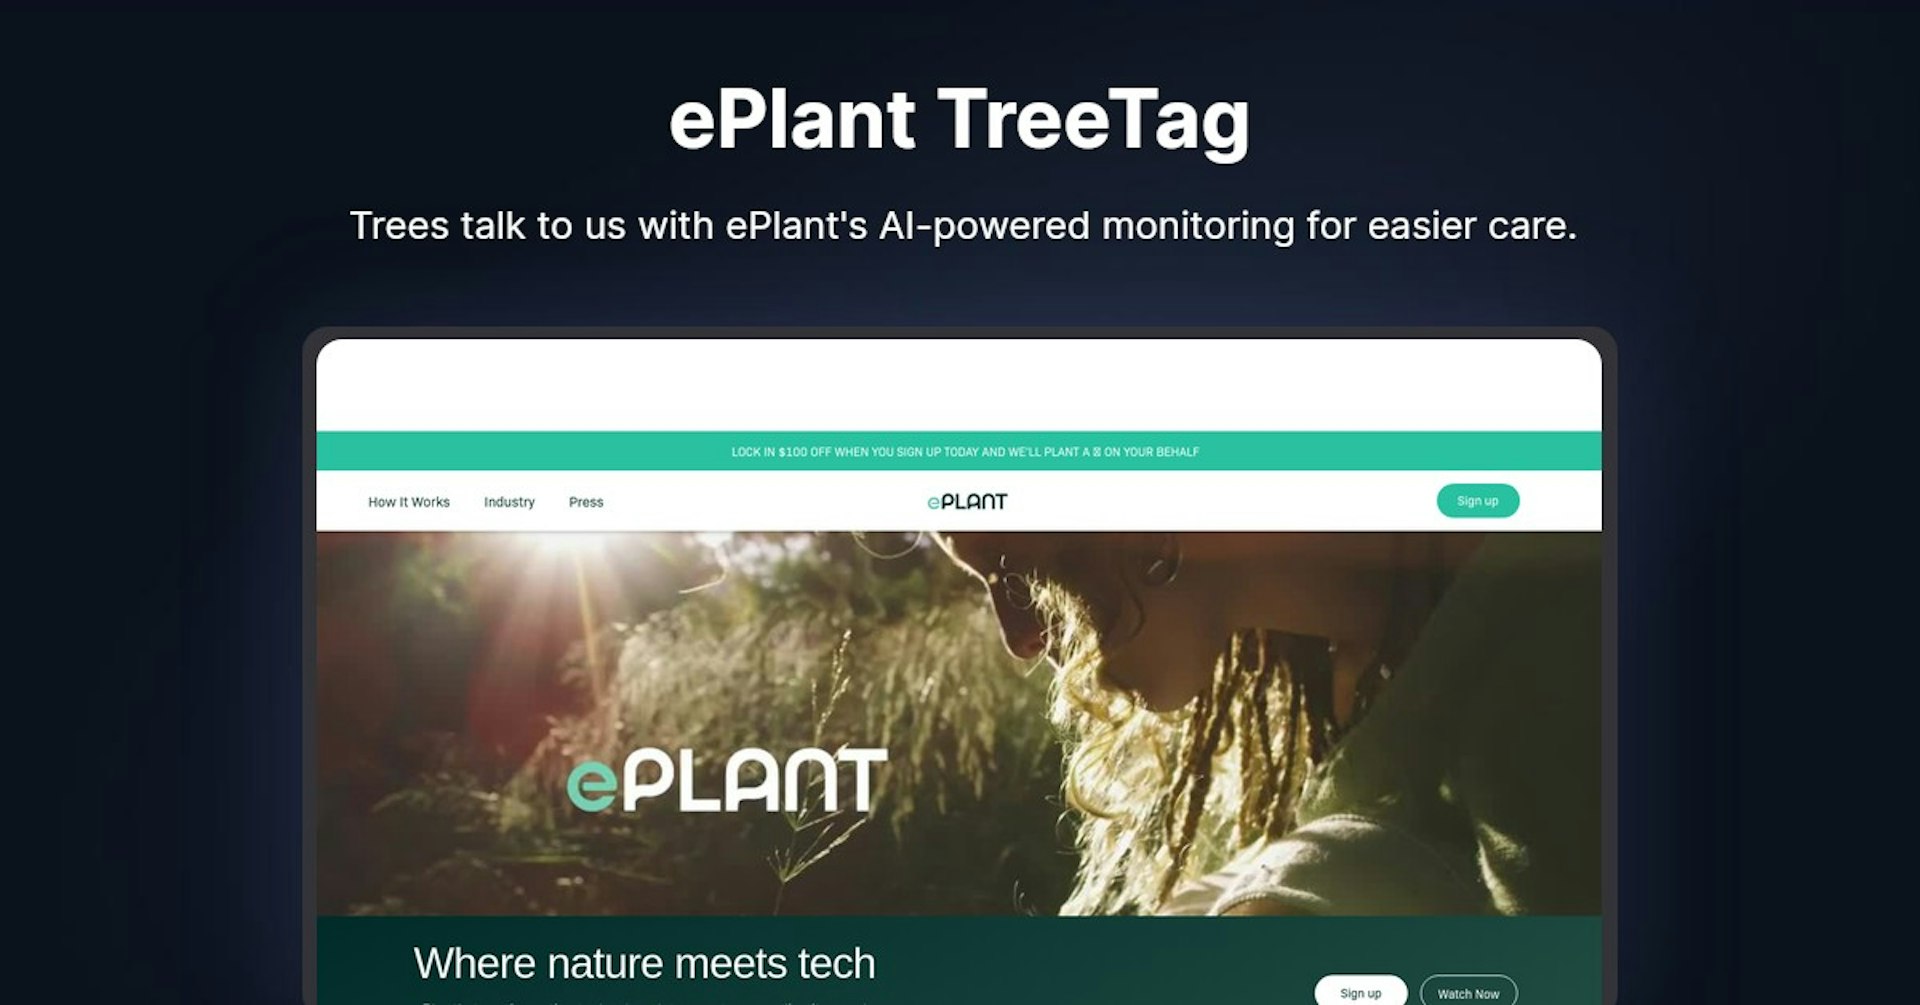 ePlant TreeTag